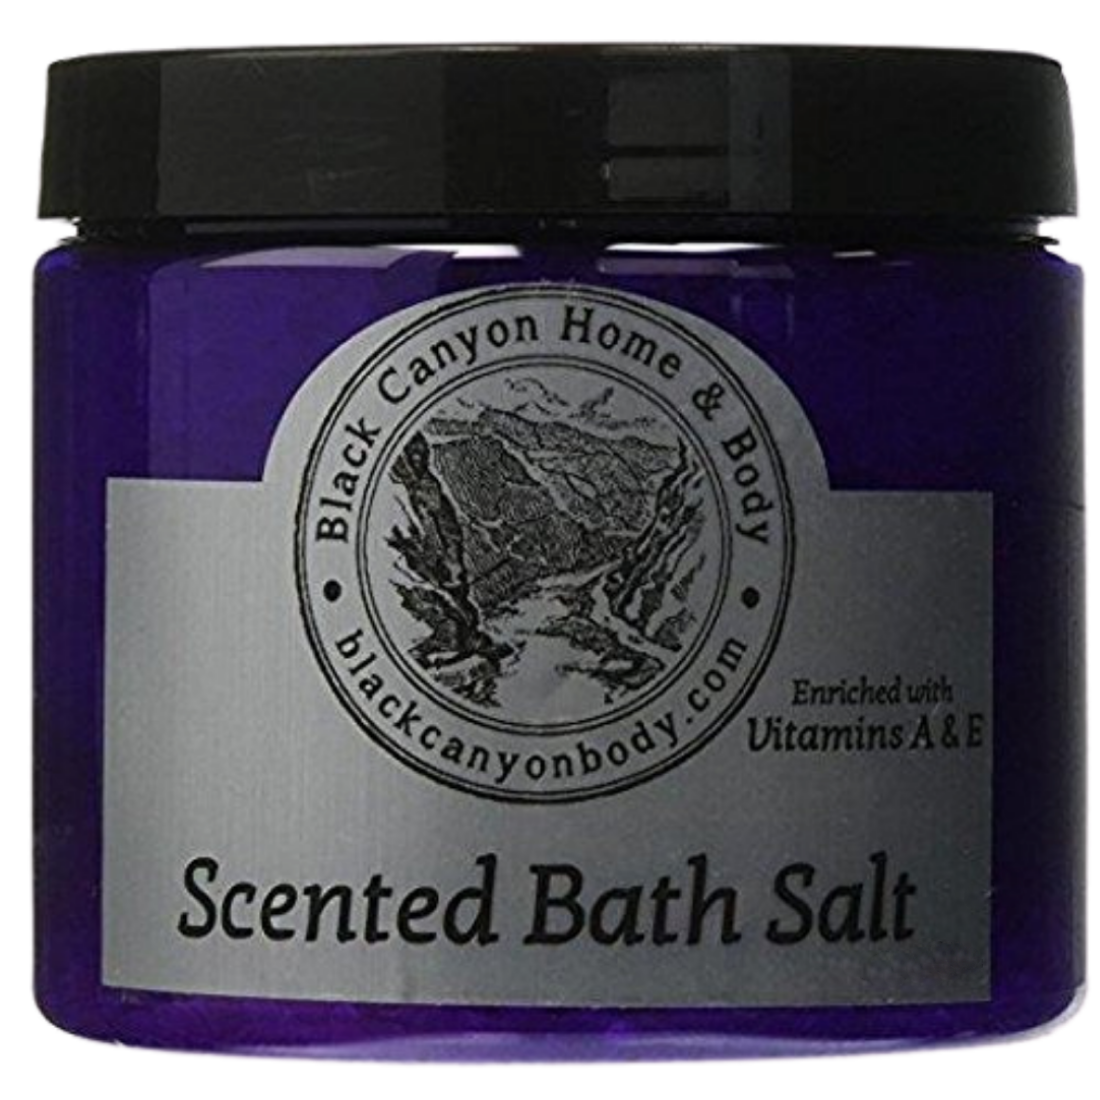 Black Canyon Simply Sexy Scented Sea Salt Bath Soak